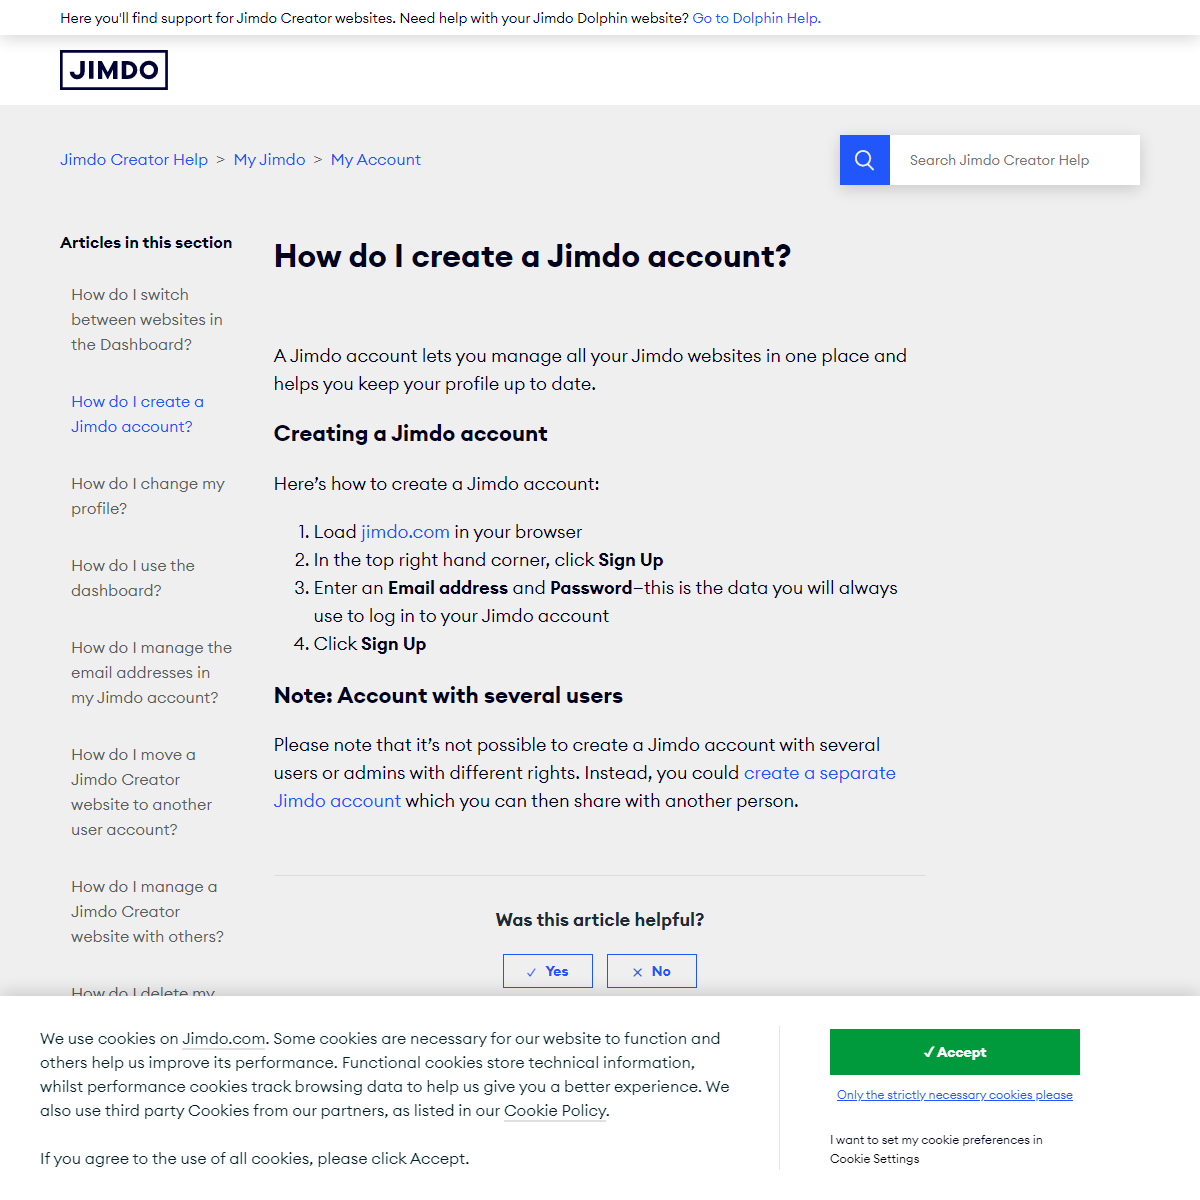 A complete backup of https://help.jimdo.com/hc/en-us/articles/115005540686-How-do-I-create-a-Jimdo-account-